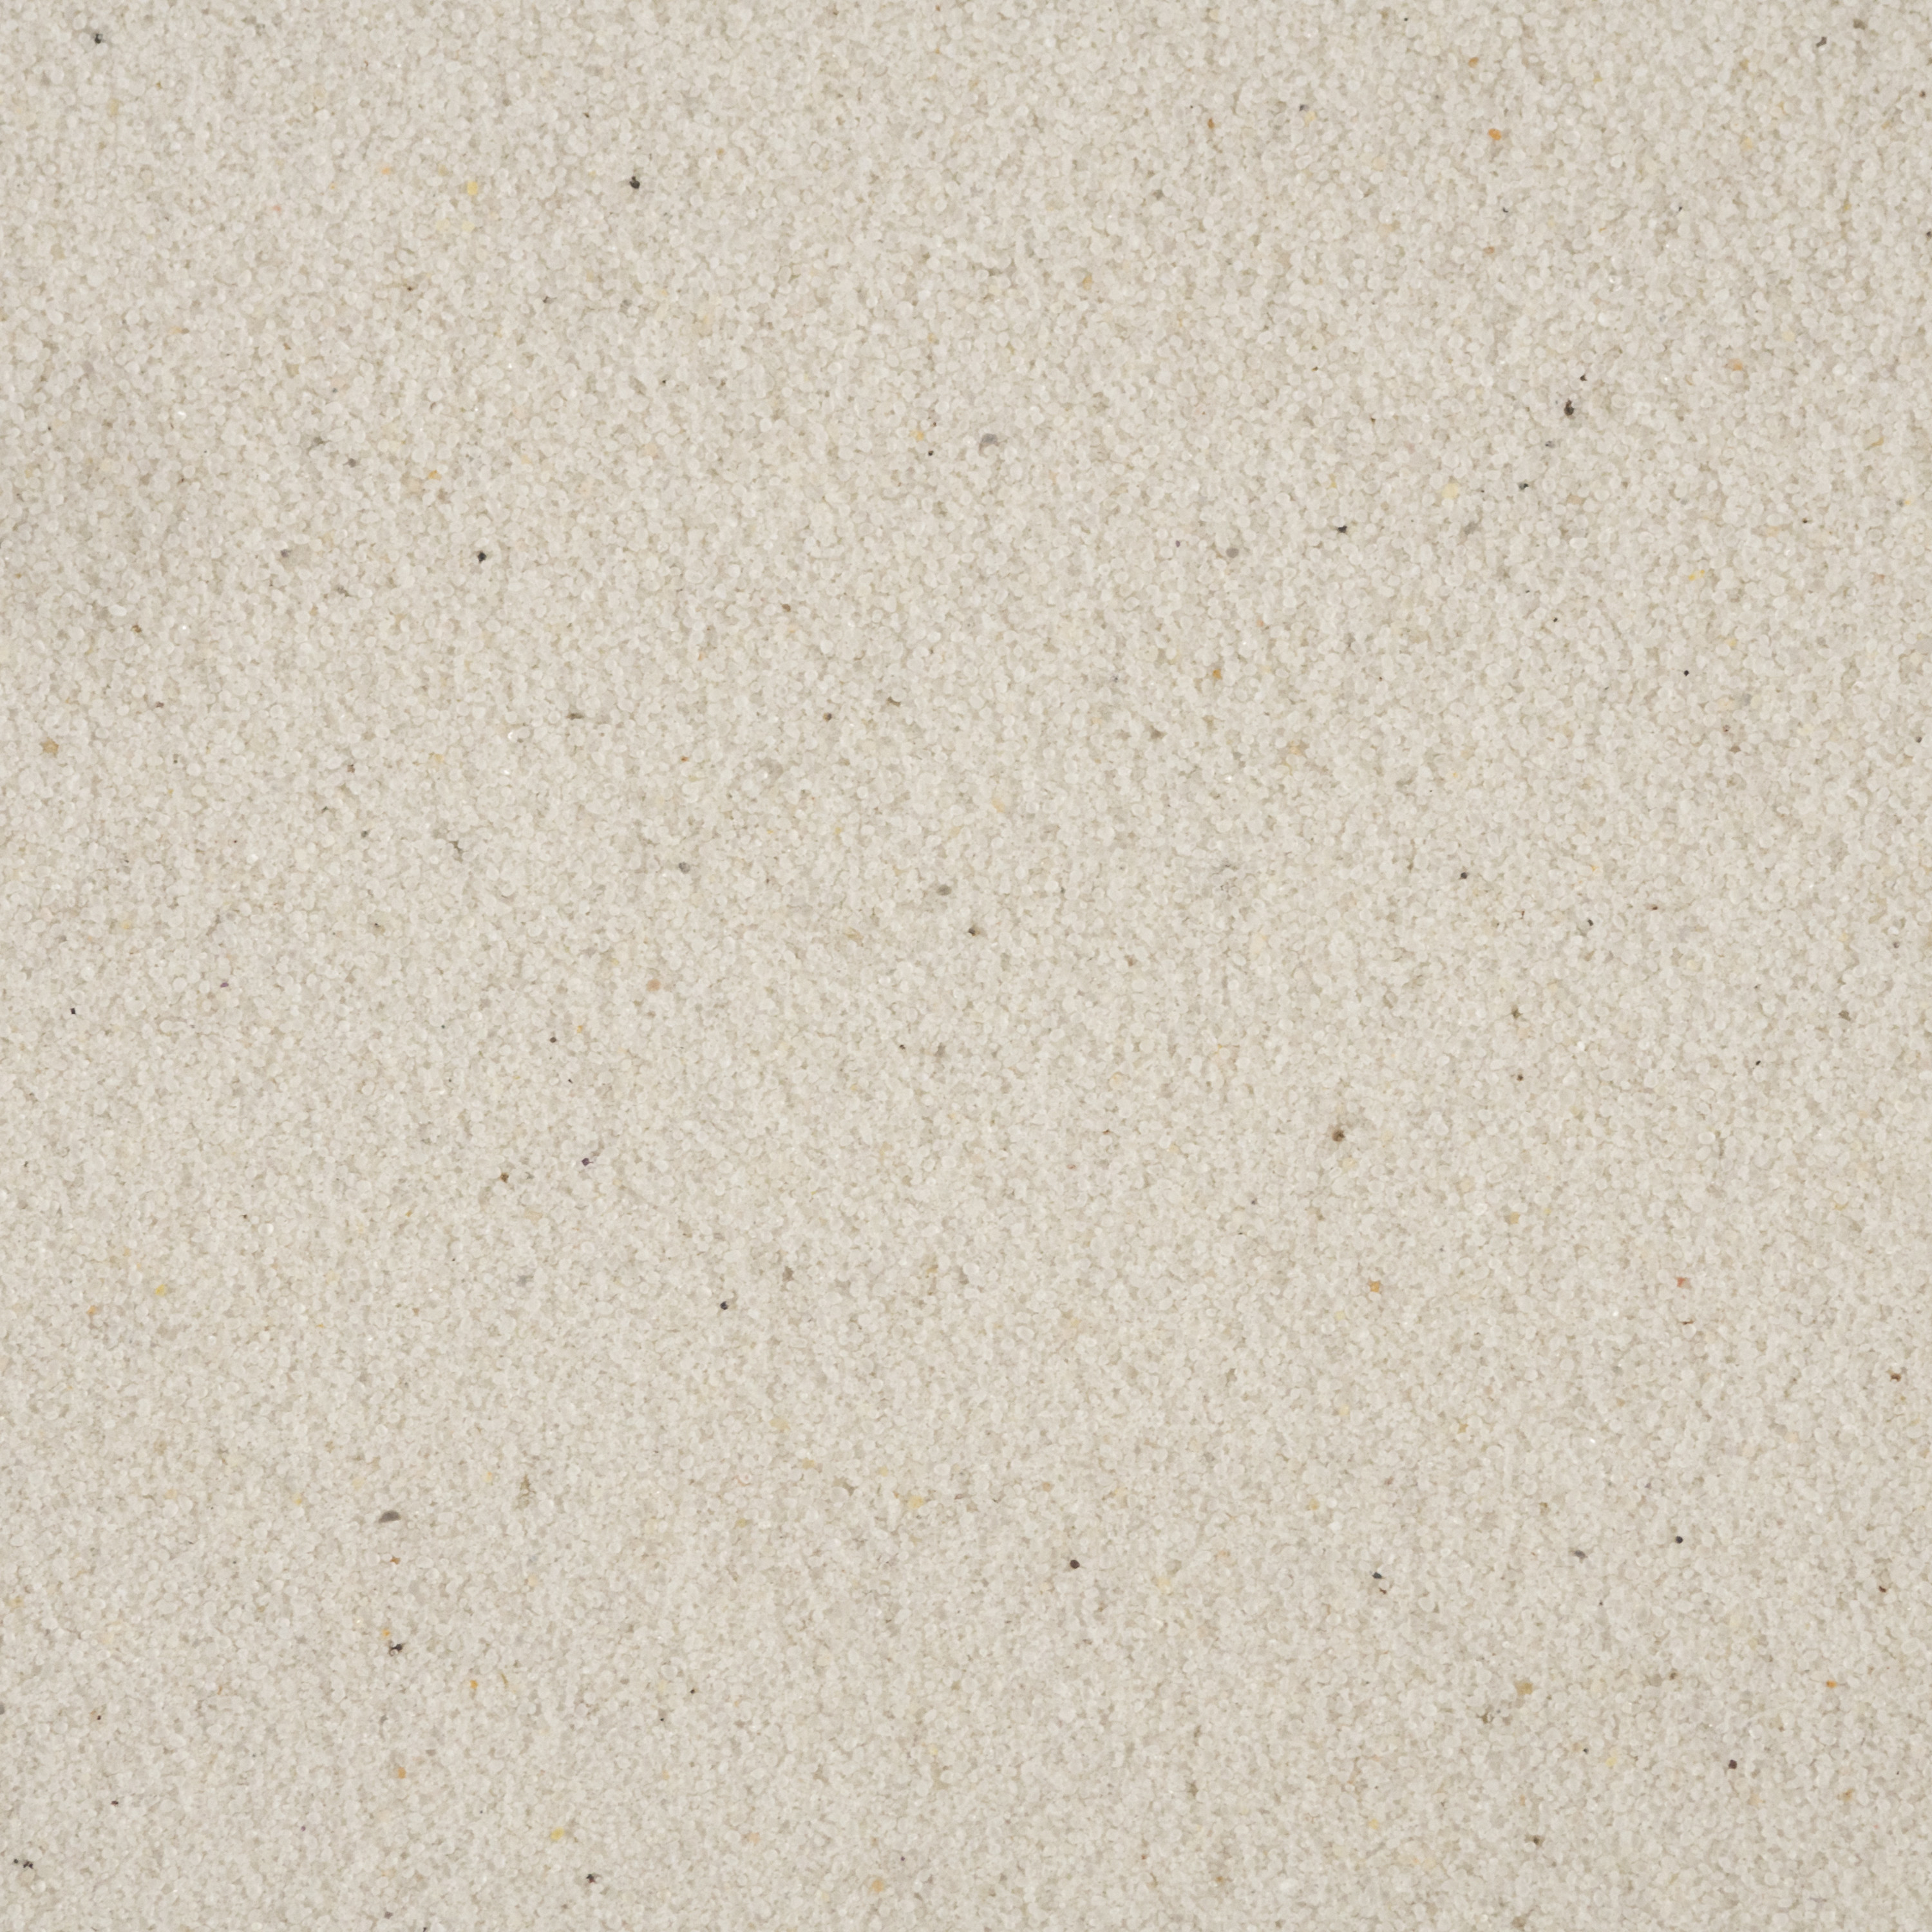 Activa Scenic Sand, 1 lb., White - image 2 of 2